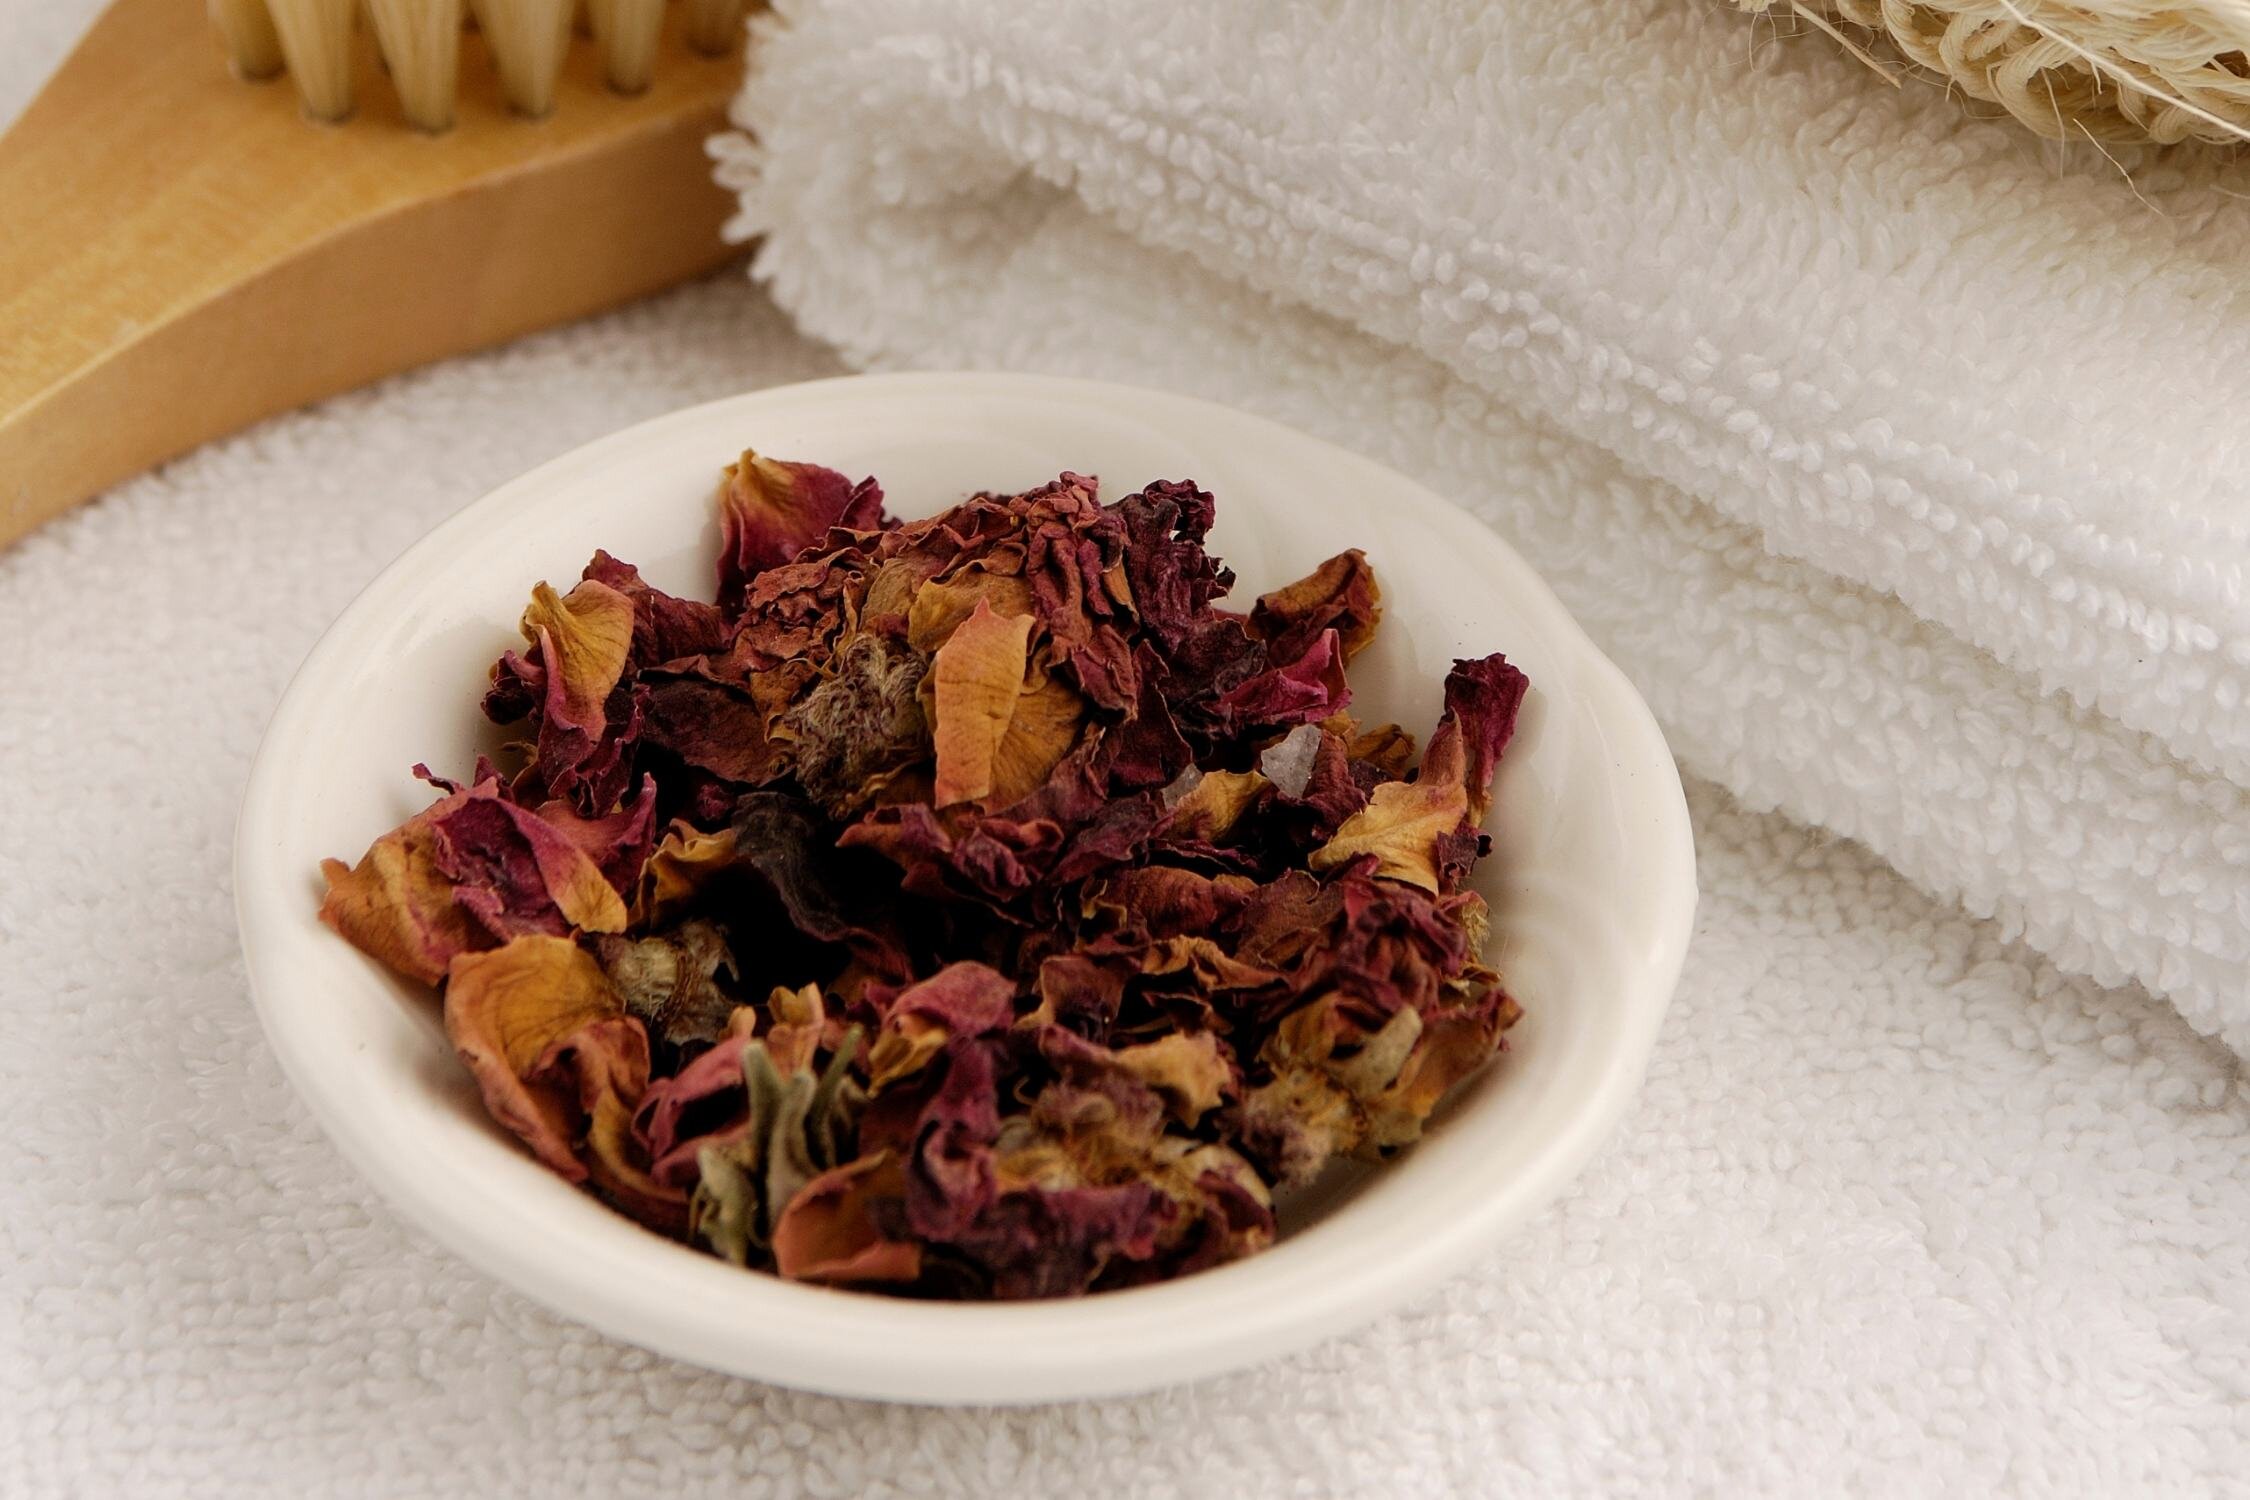 How To Make Relaxing Herbal Bath Tea